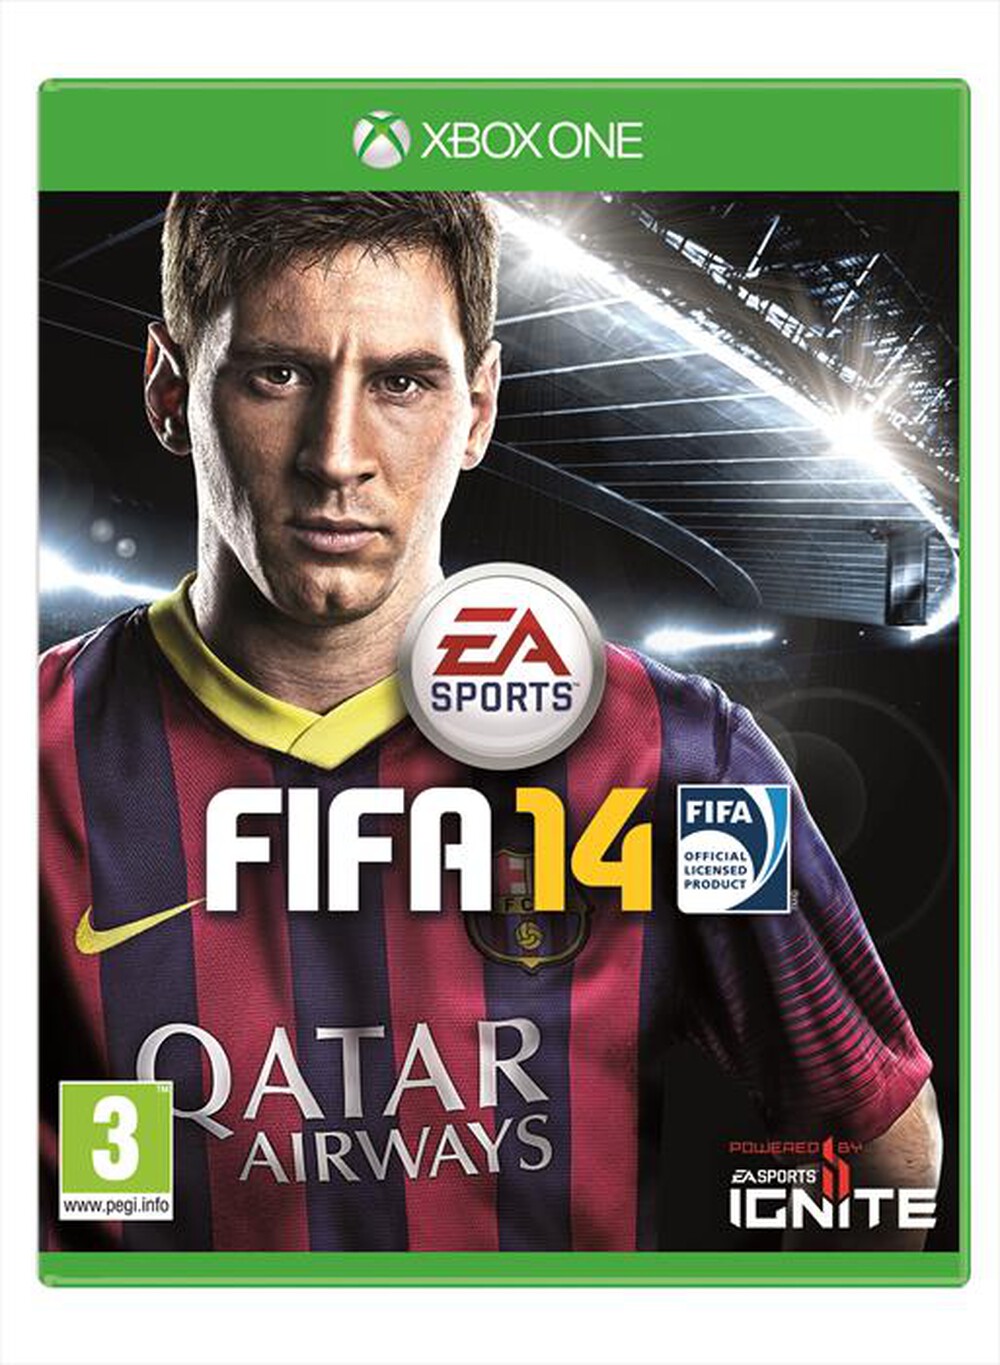 "ELECTRONIC ARTS - FIFA 14 Xbox One"